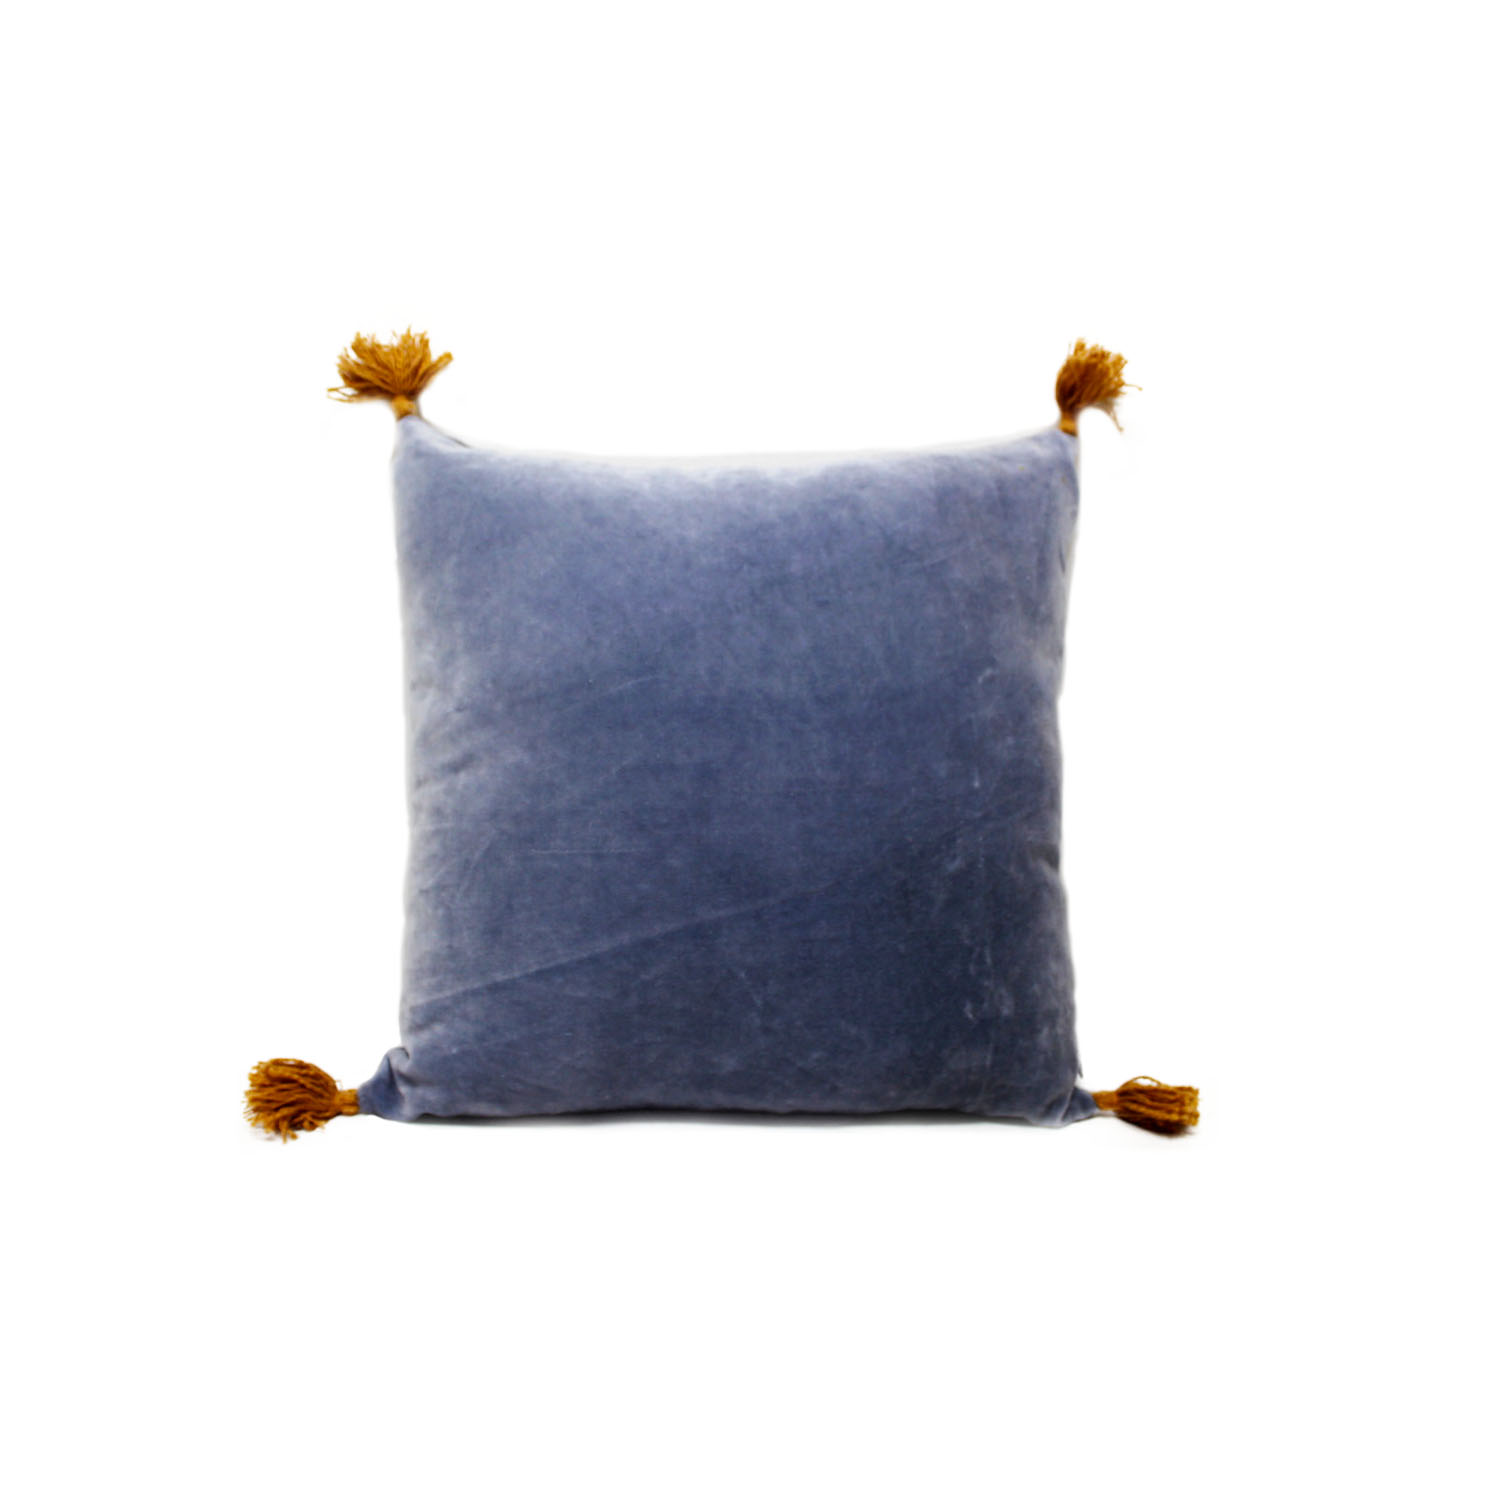 Solid greyish blue color velvet cushion covers - Cushion Covers - FOLKWAYS